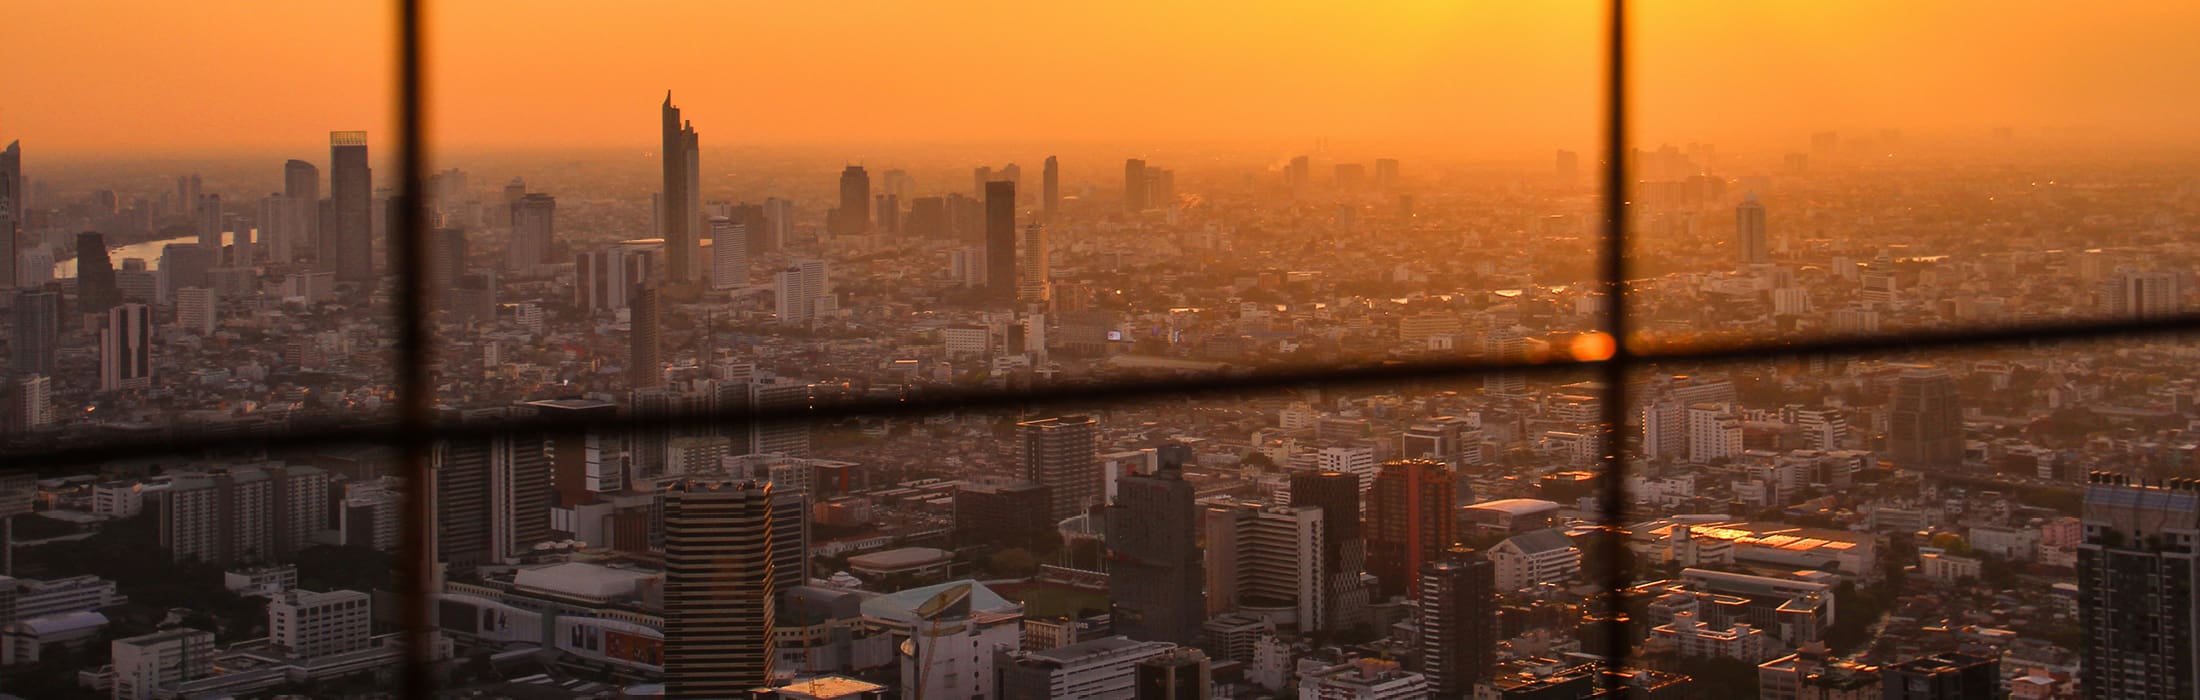 Bangkok's dazzling skyline pictured against a blood-orange sunset